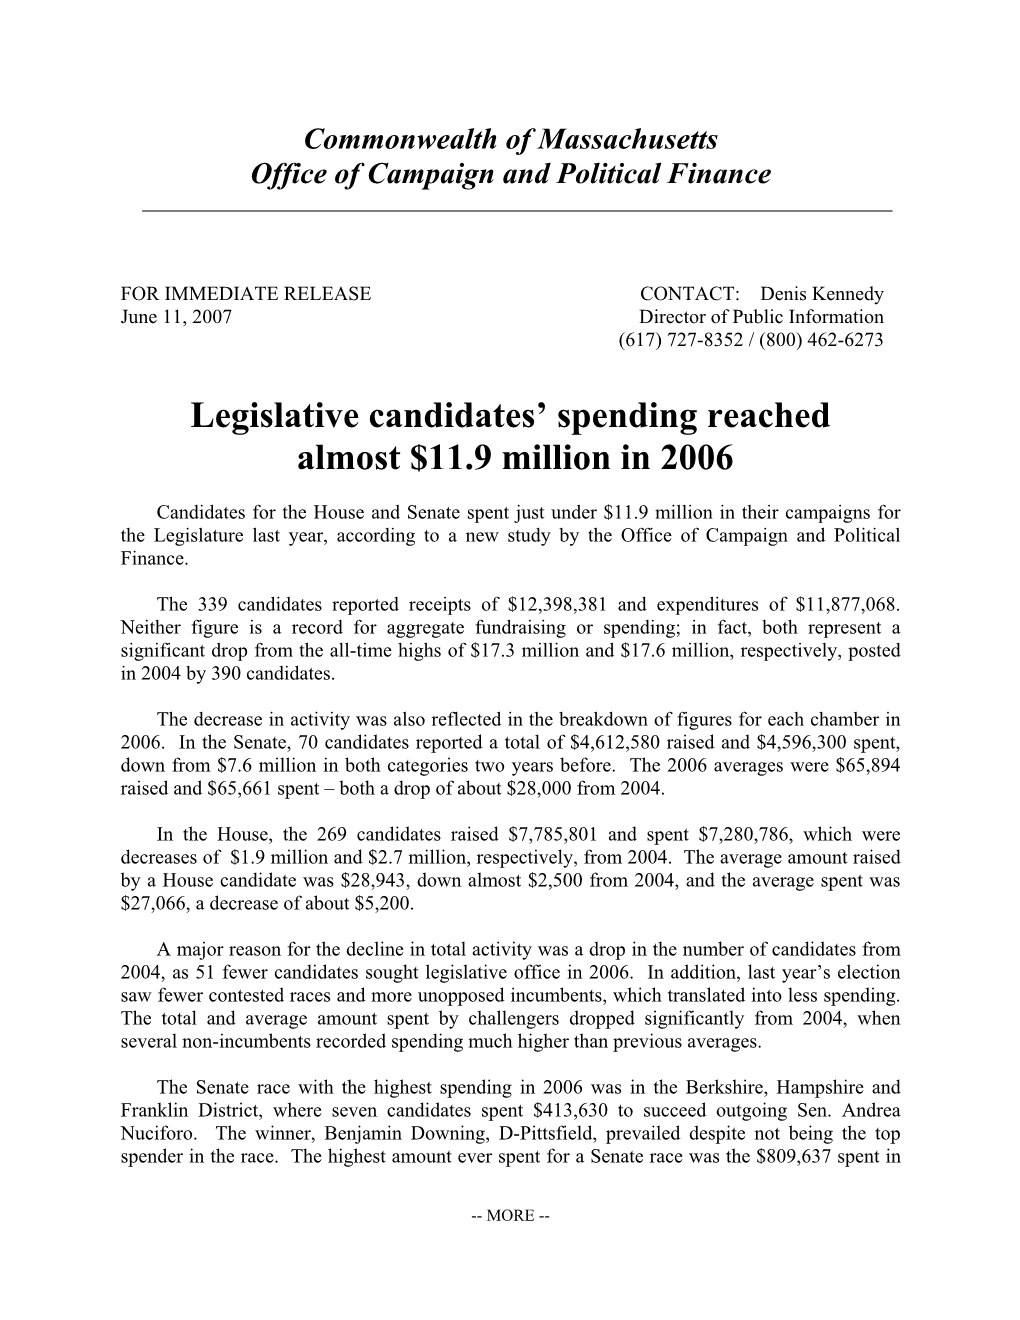 Legislative Candidates' Spending Reached Almost $11.9 Million in 2006